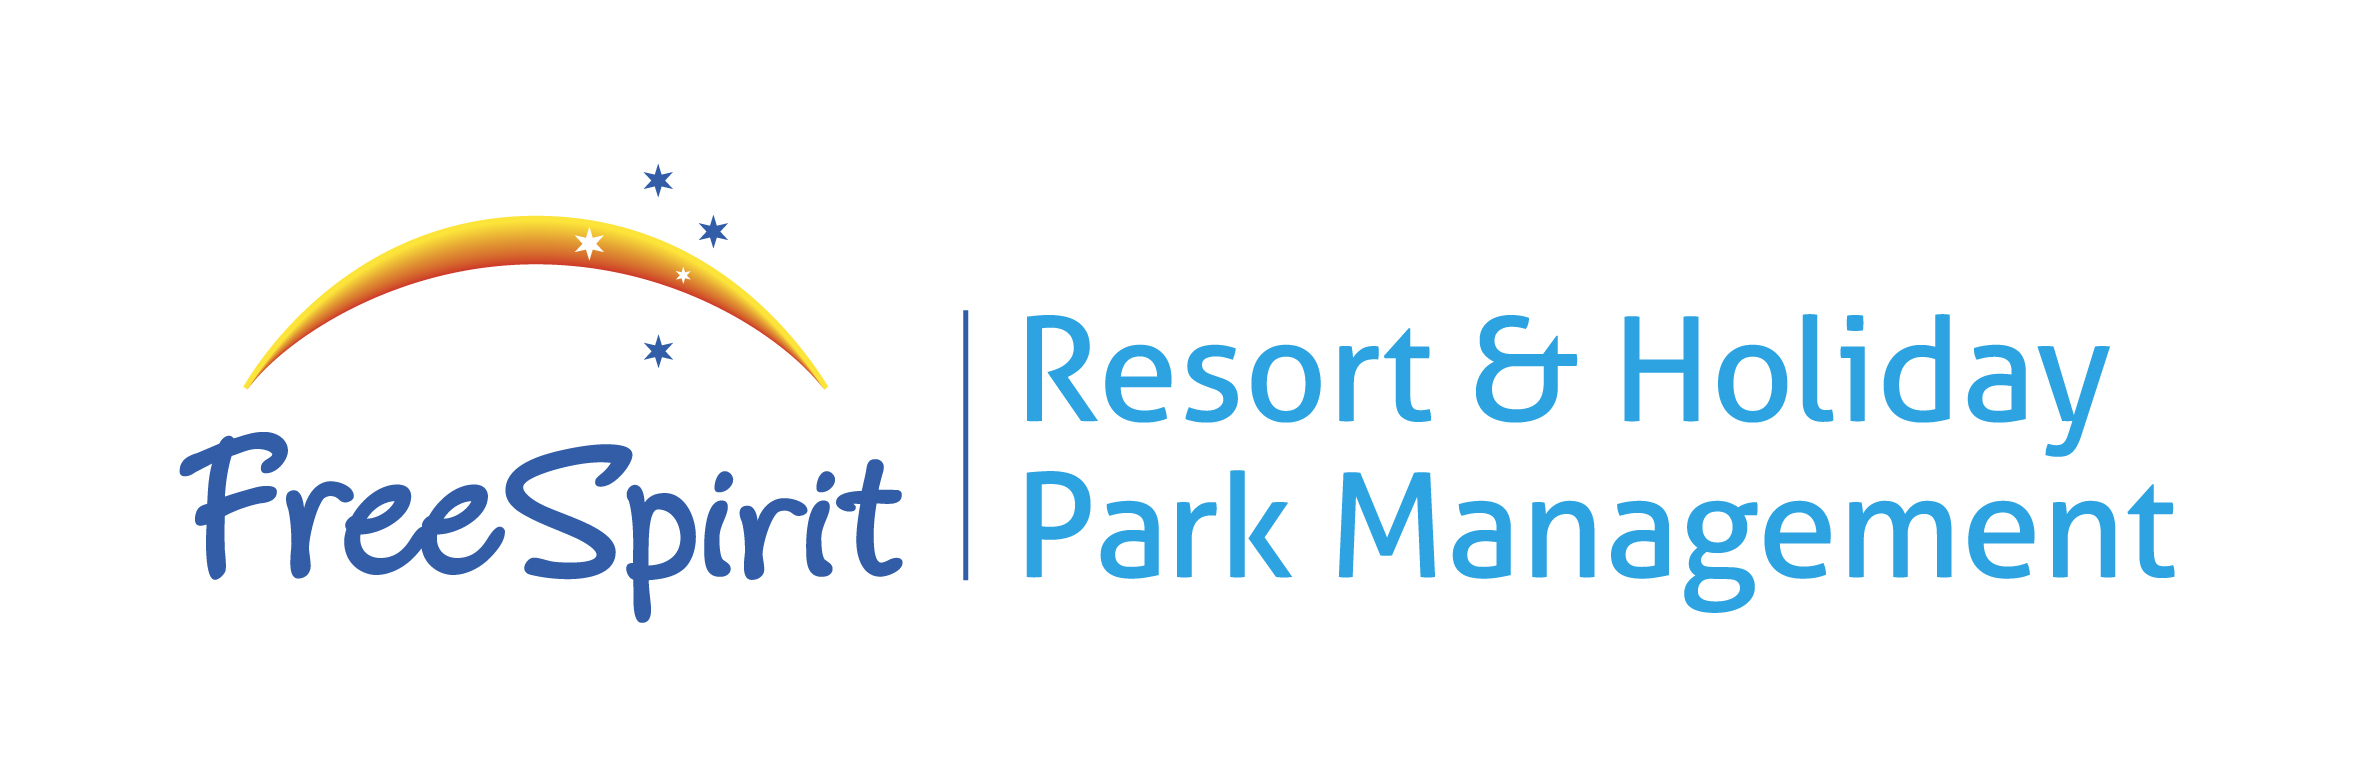 FreeSpirit Resort & Holiday Park Management